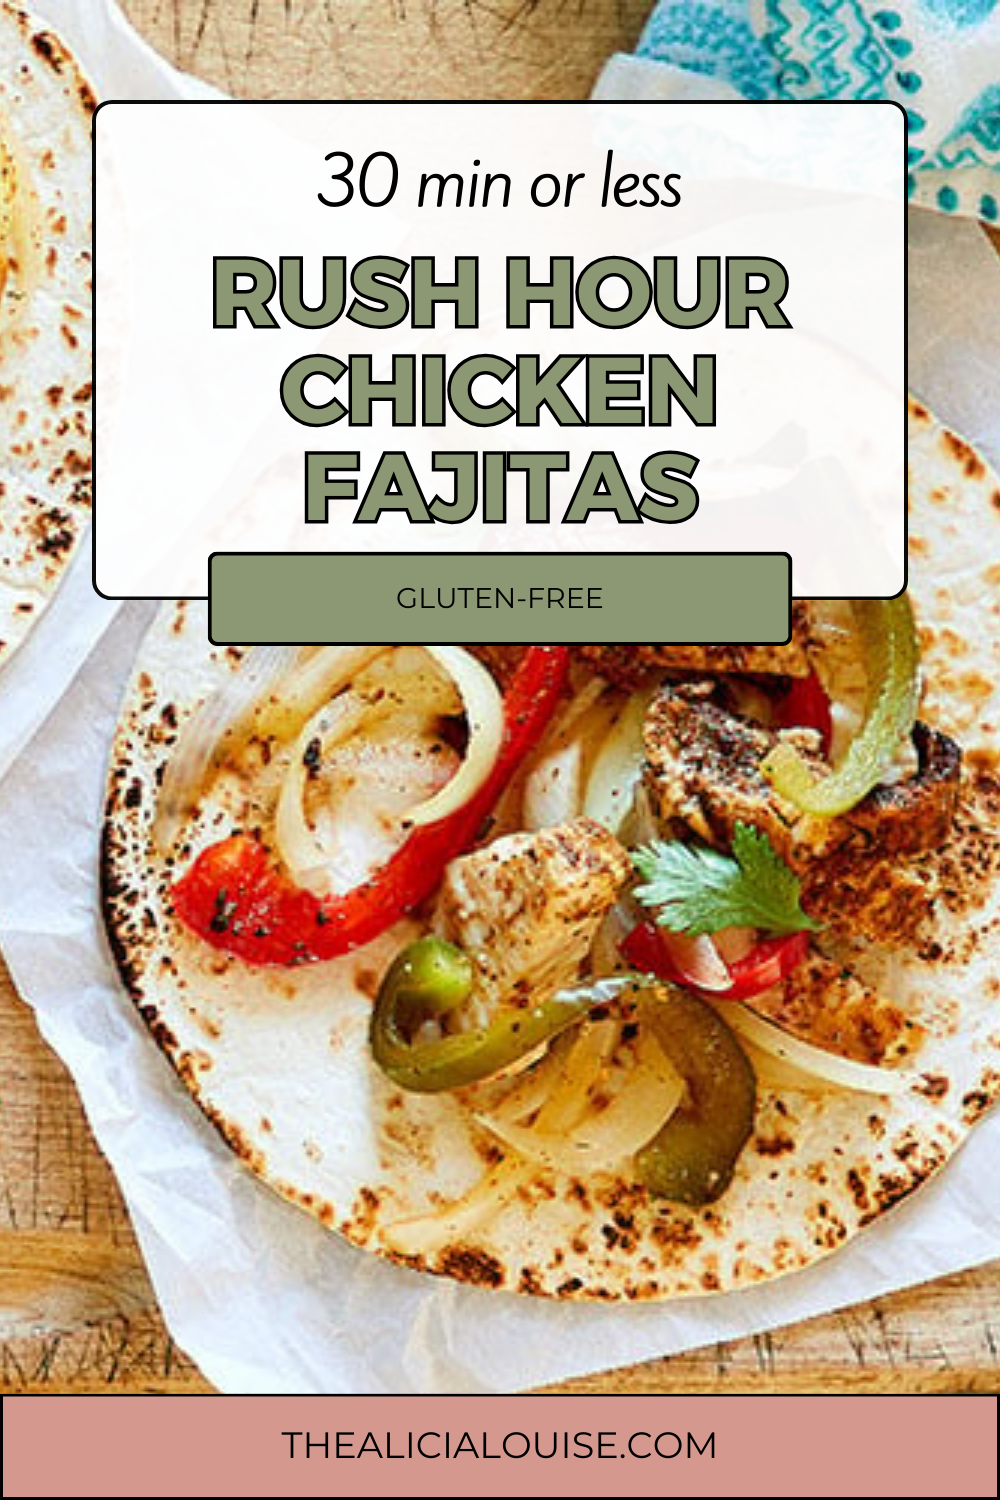 30 min or less gluten-free rush hour chicken fajitas